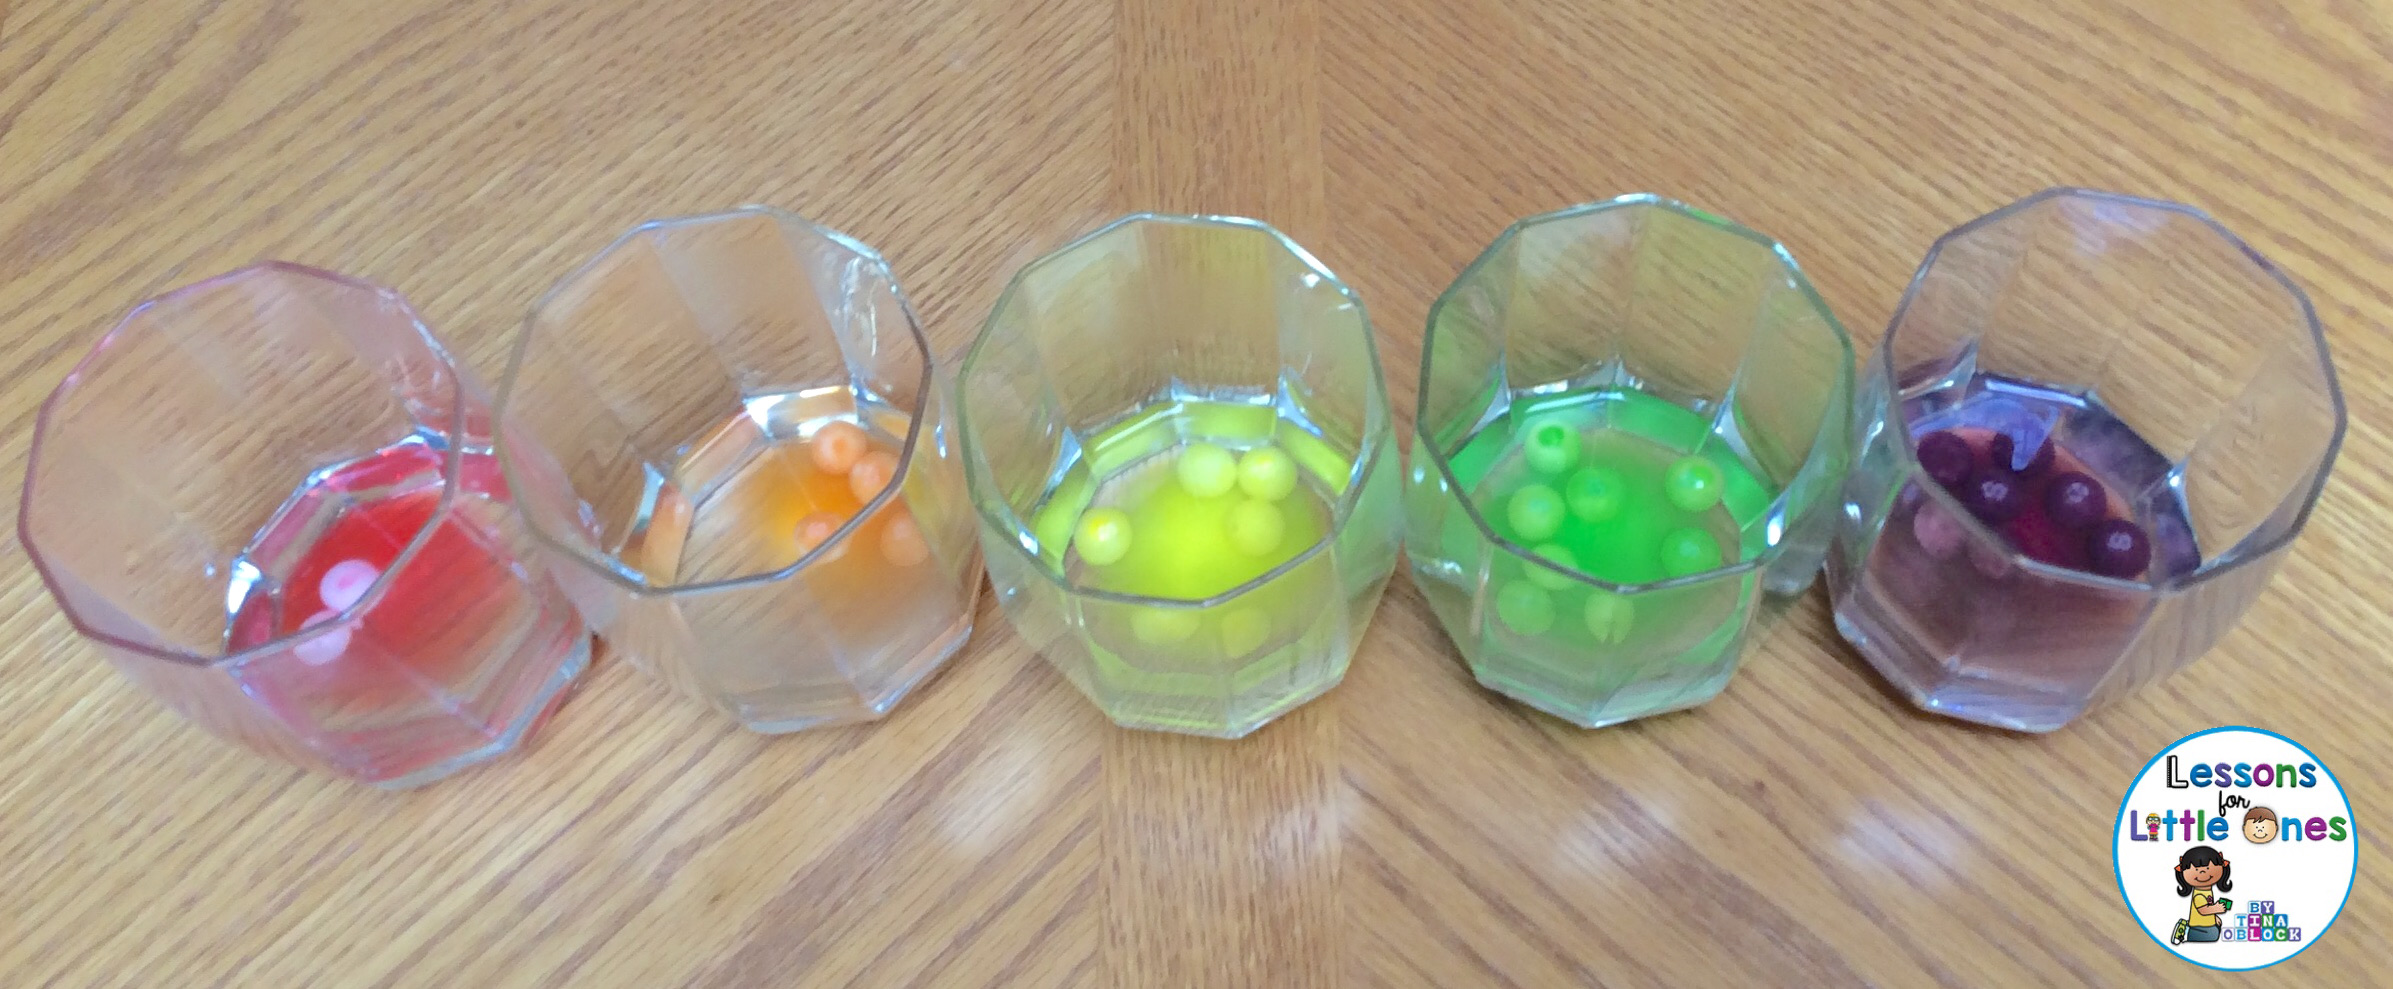 Skittles for rainbow density experiment